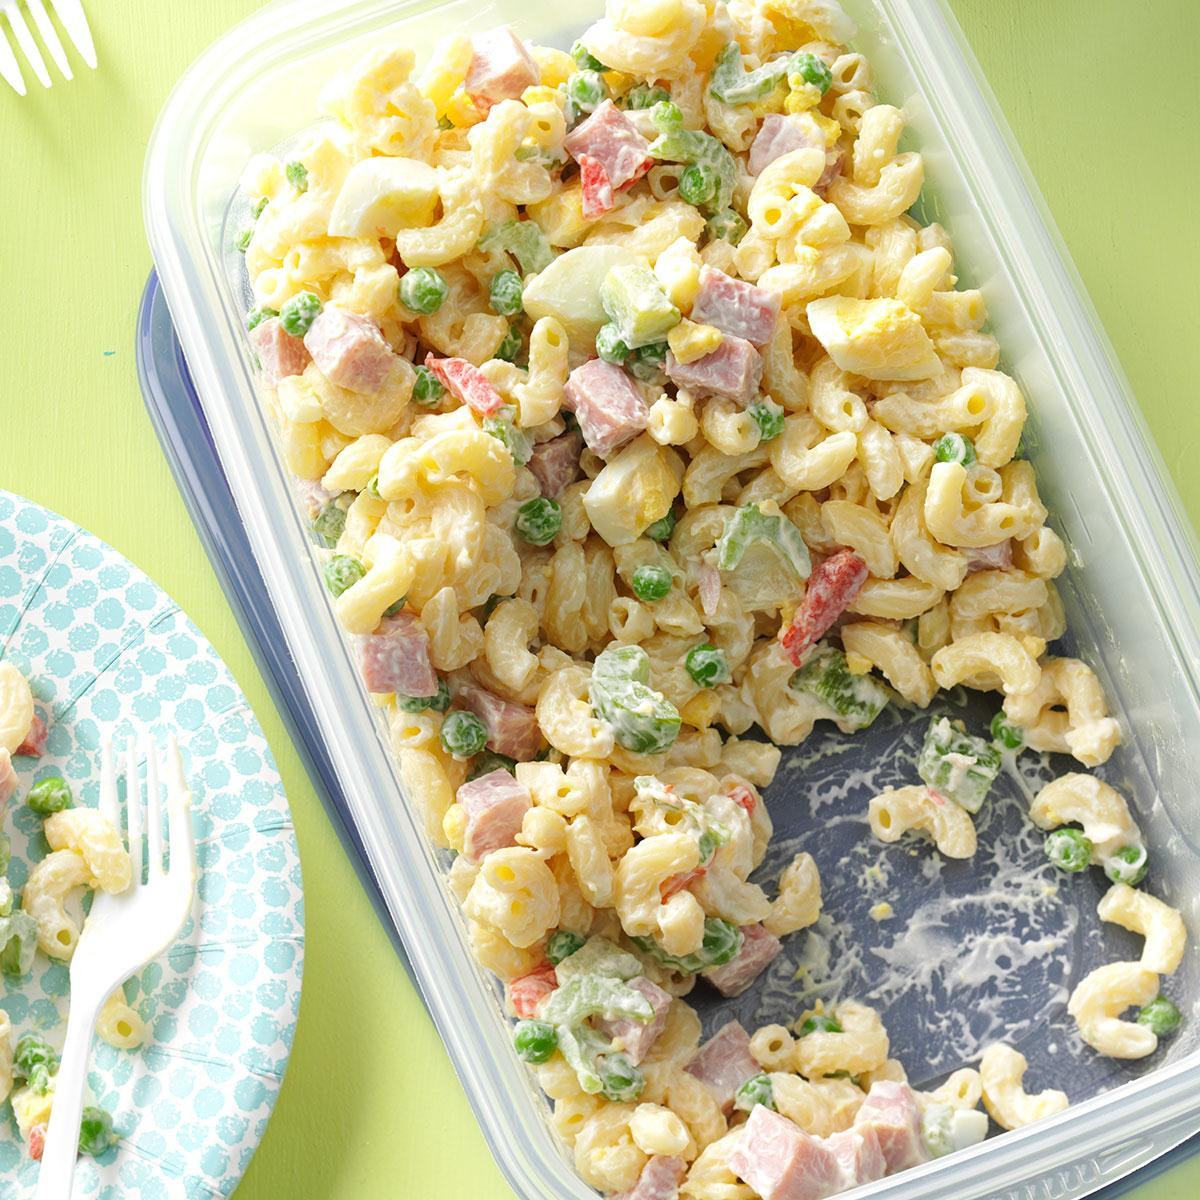 How To Make Macaroni Salad
 Easy Macaroni Salad Recipe